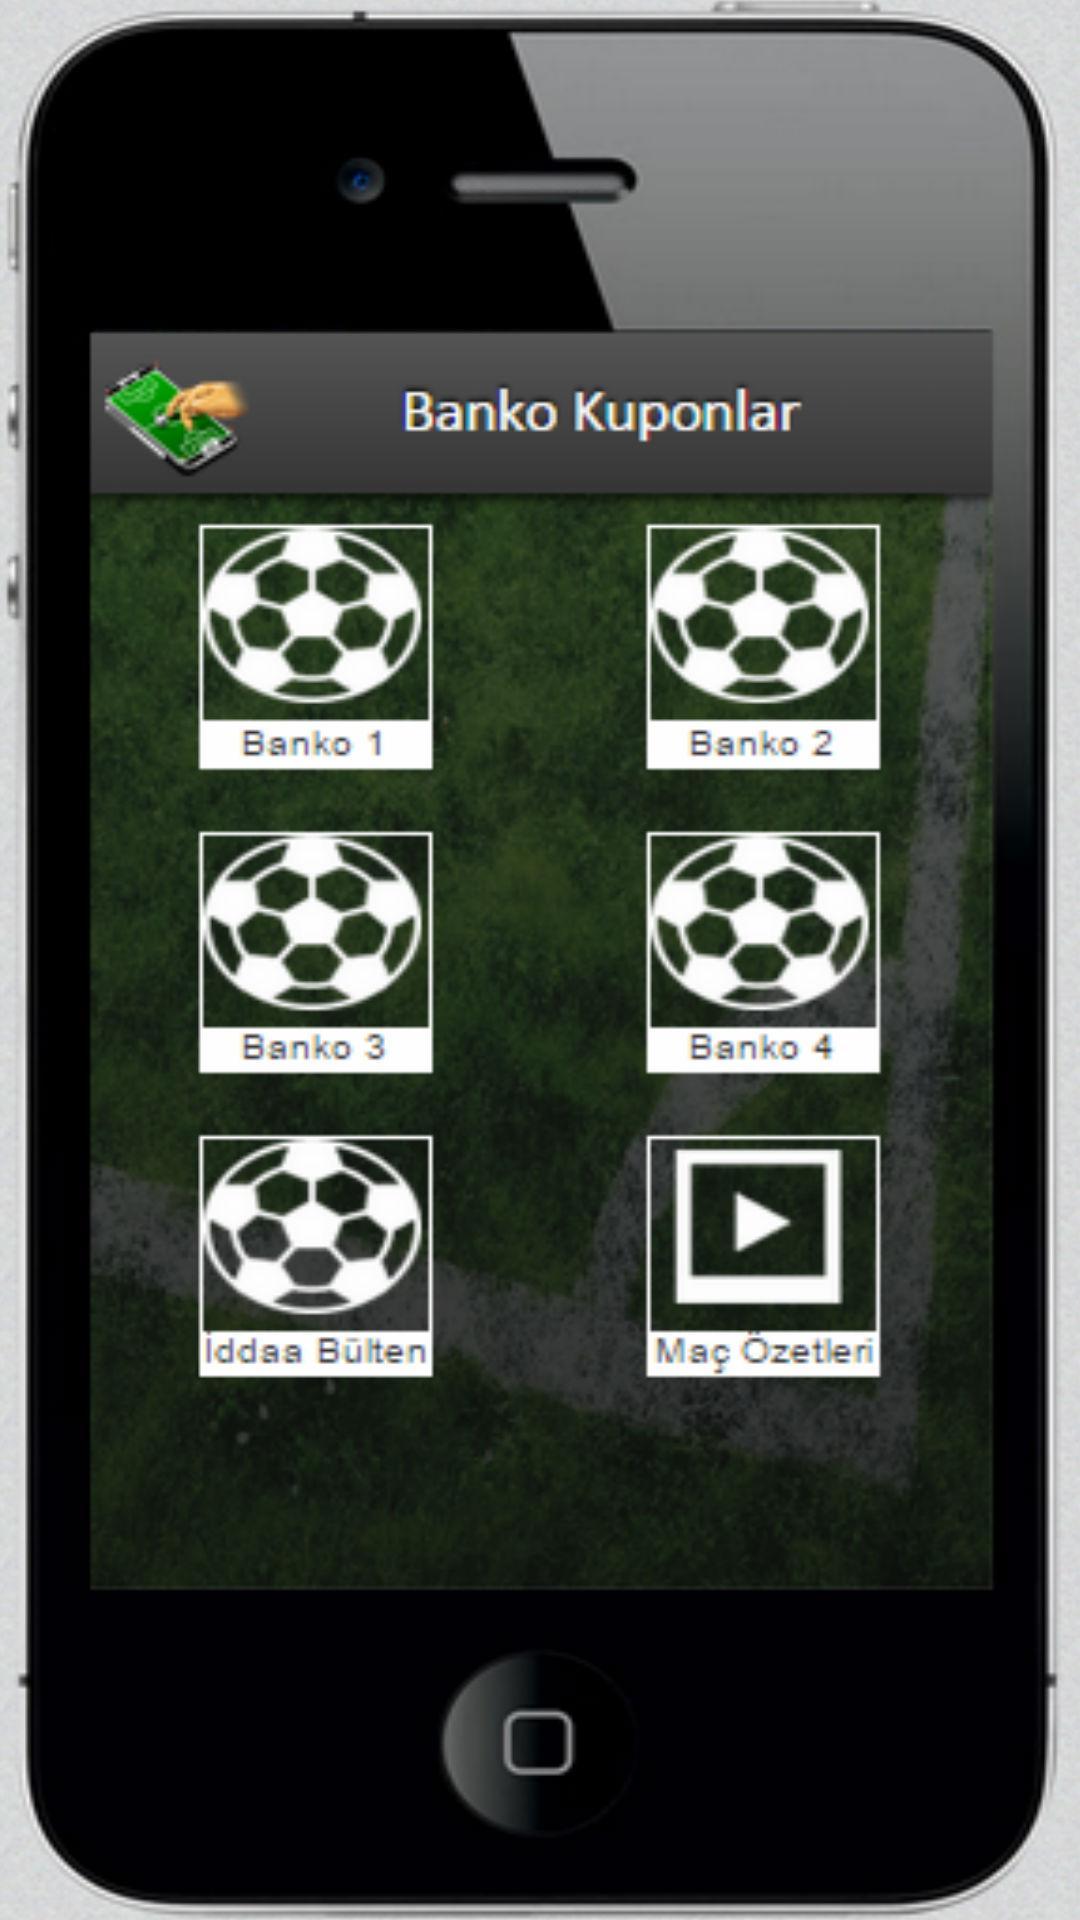 The Matches на андроид. Android game Greece Match. Matches для андроид